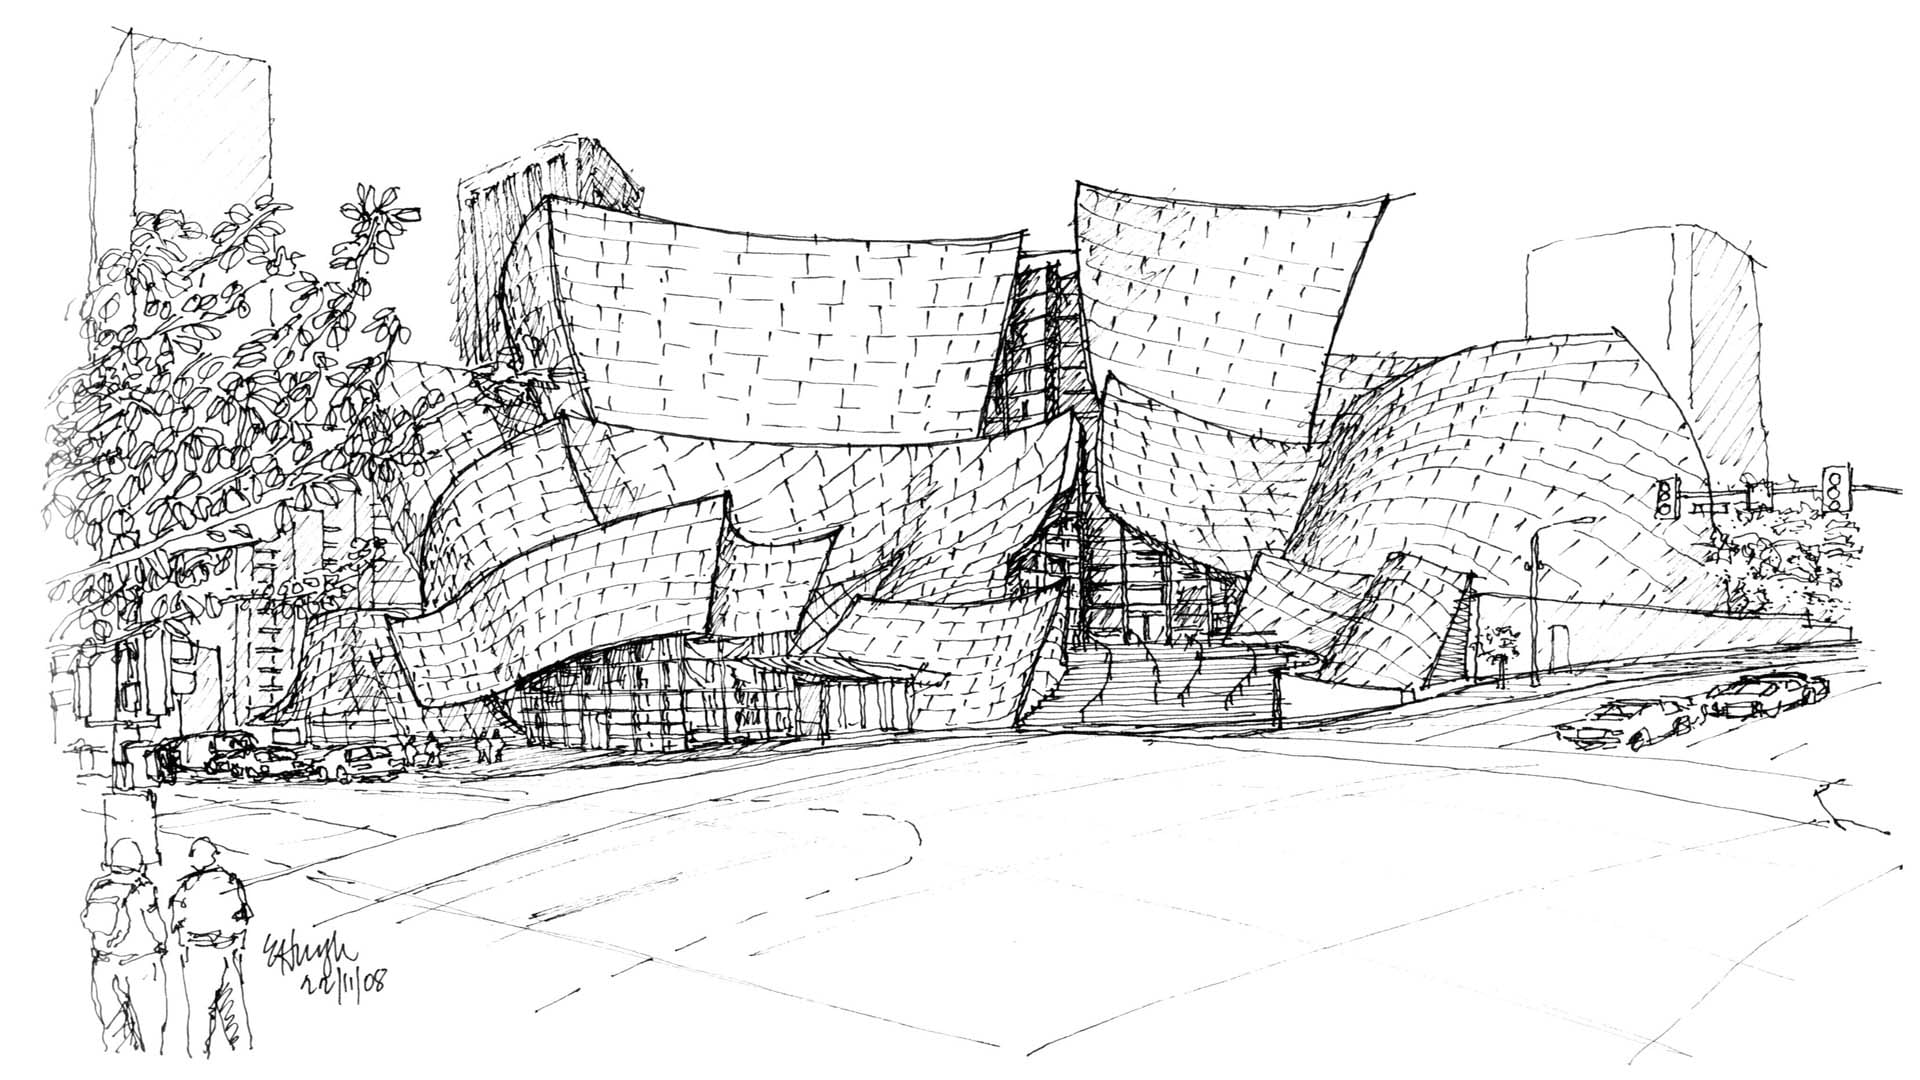 Frank Gehry, creatore di sogni